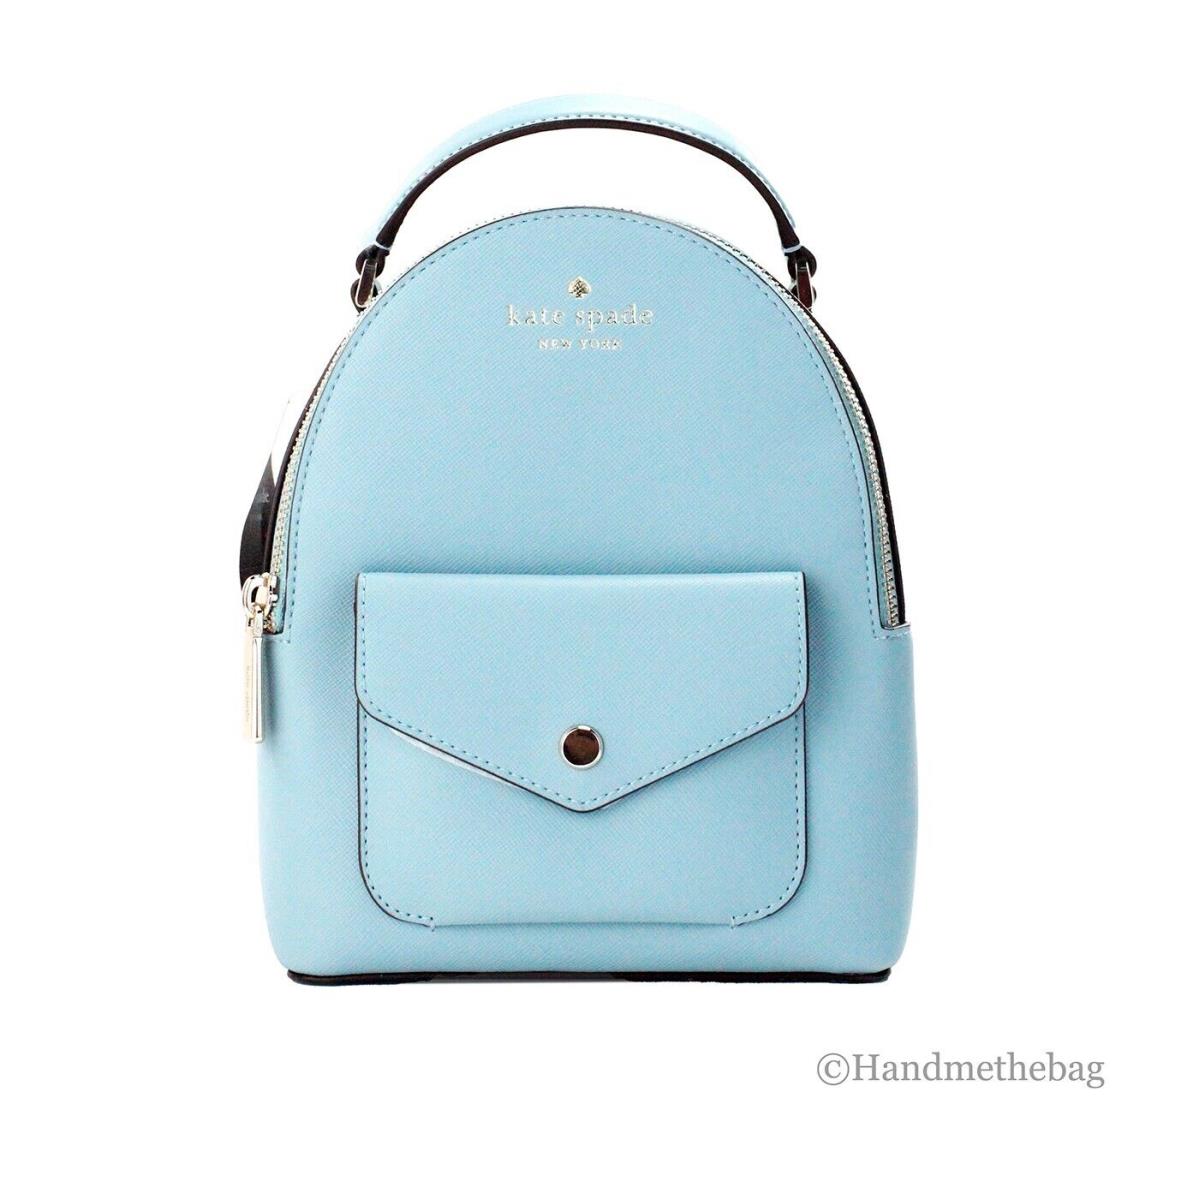 Kate Spade Schuyler Mini Smoky Blue Saffiano Pvc Leather Backpack Bag Purse